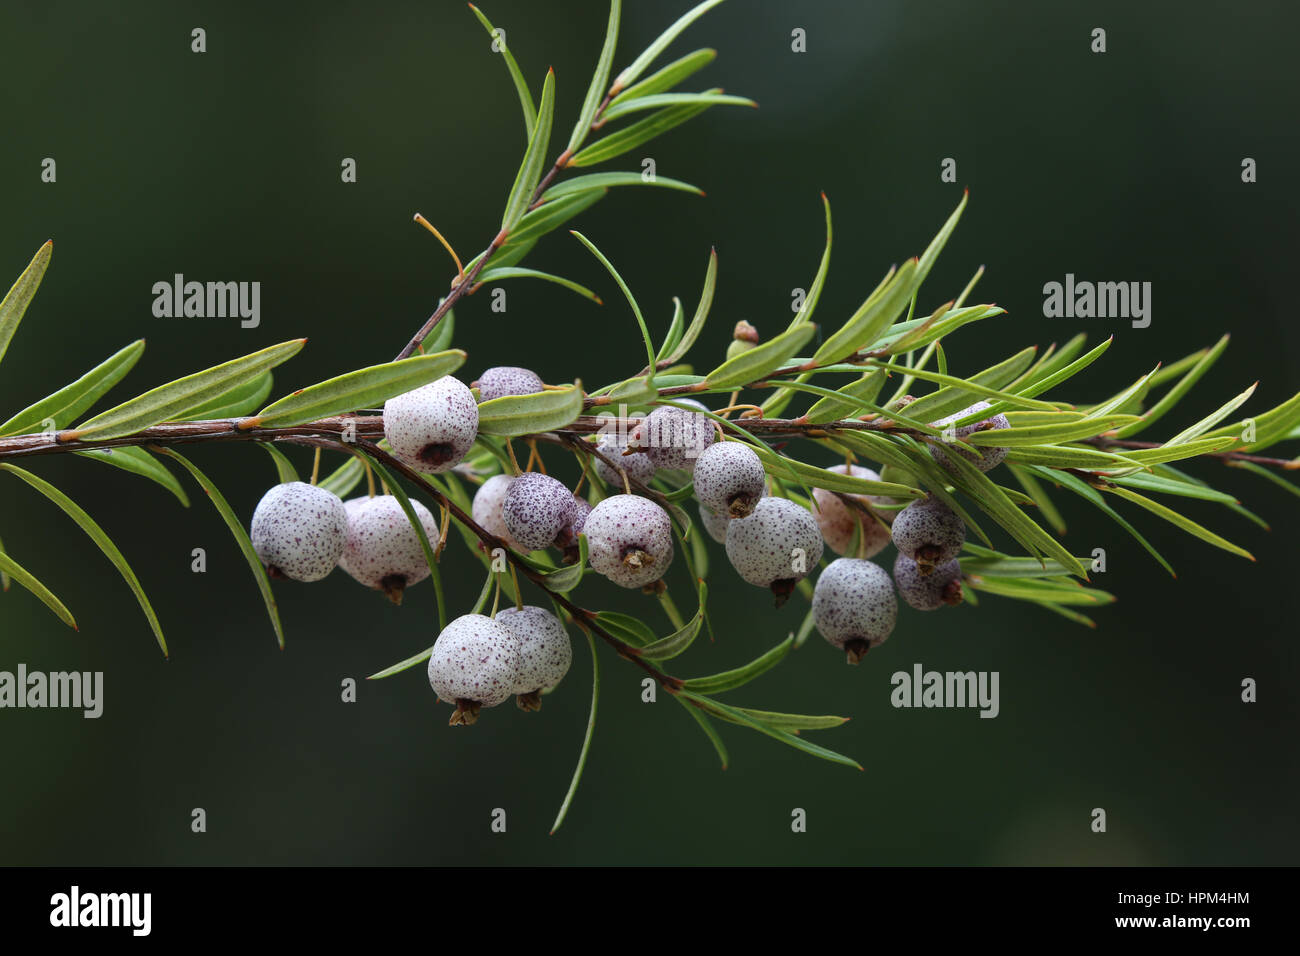 White Berries of Austromyrtus Dulcis or Midgen Berry Tree Stock Image -  Image of green, silky: 275058149